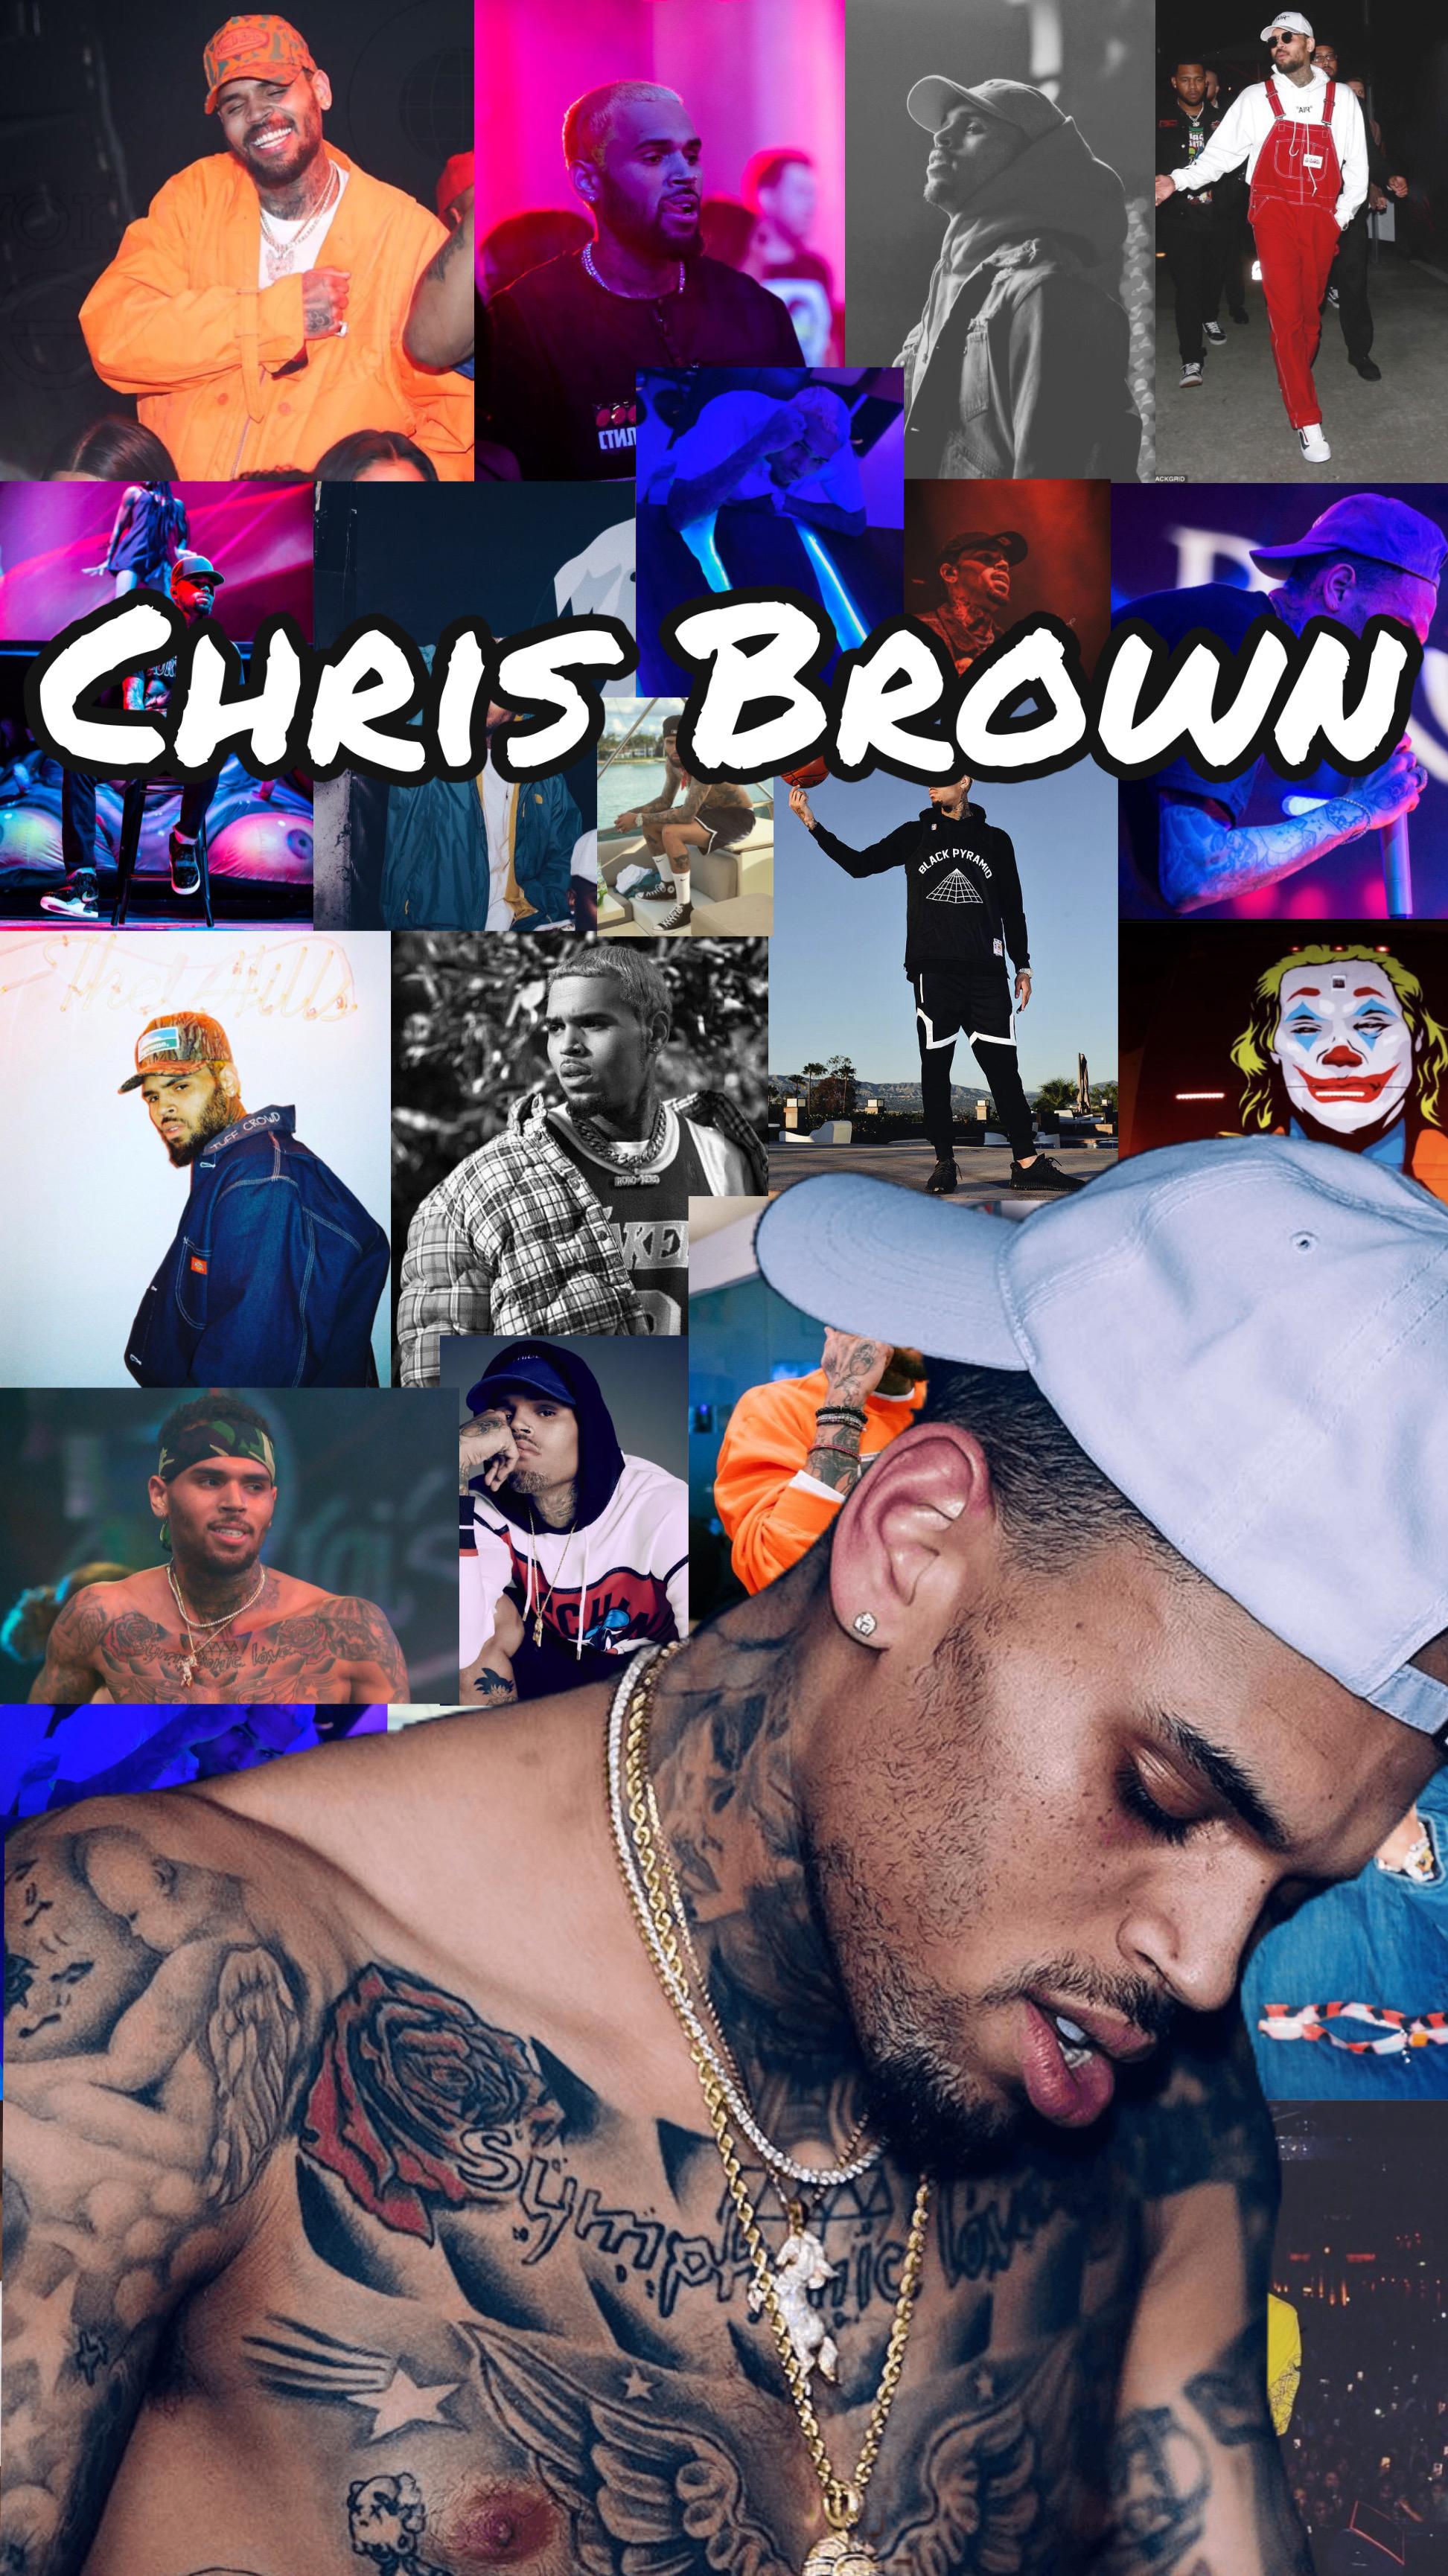 Chris Brown Aesthetic Wallpapers - Top Free Chris Brown Aesthetic ...